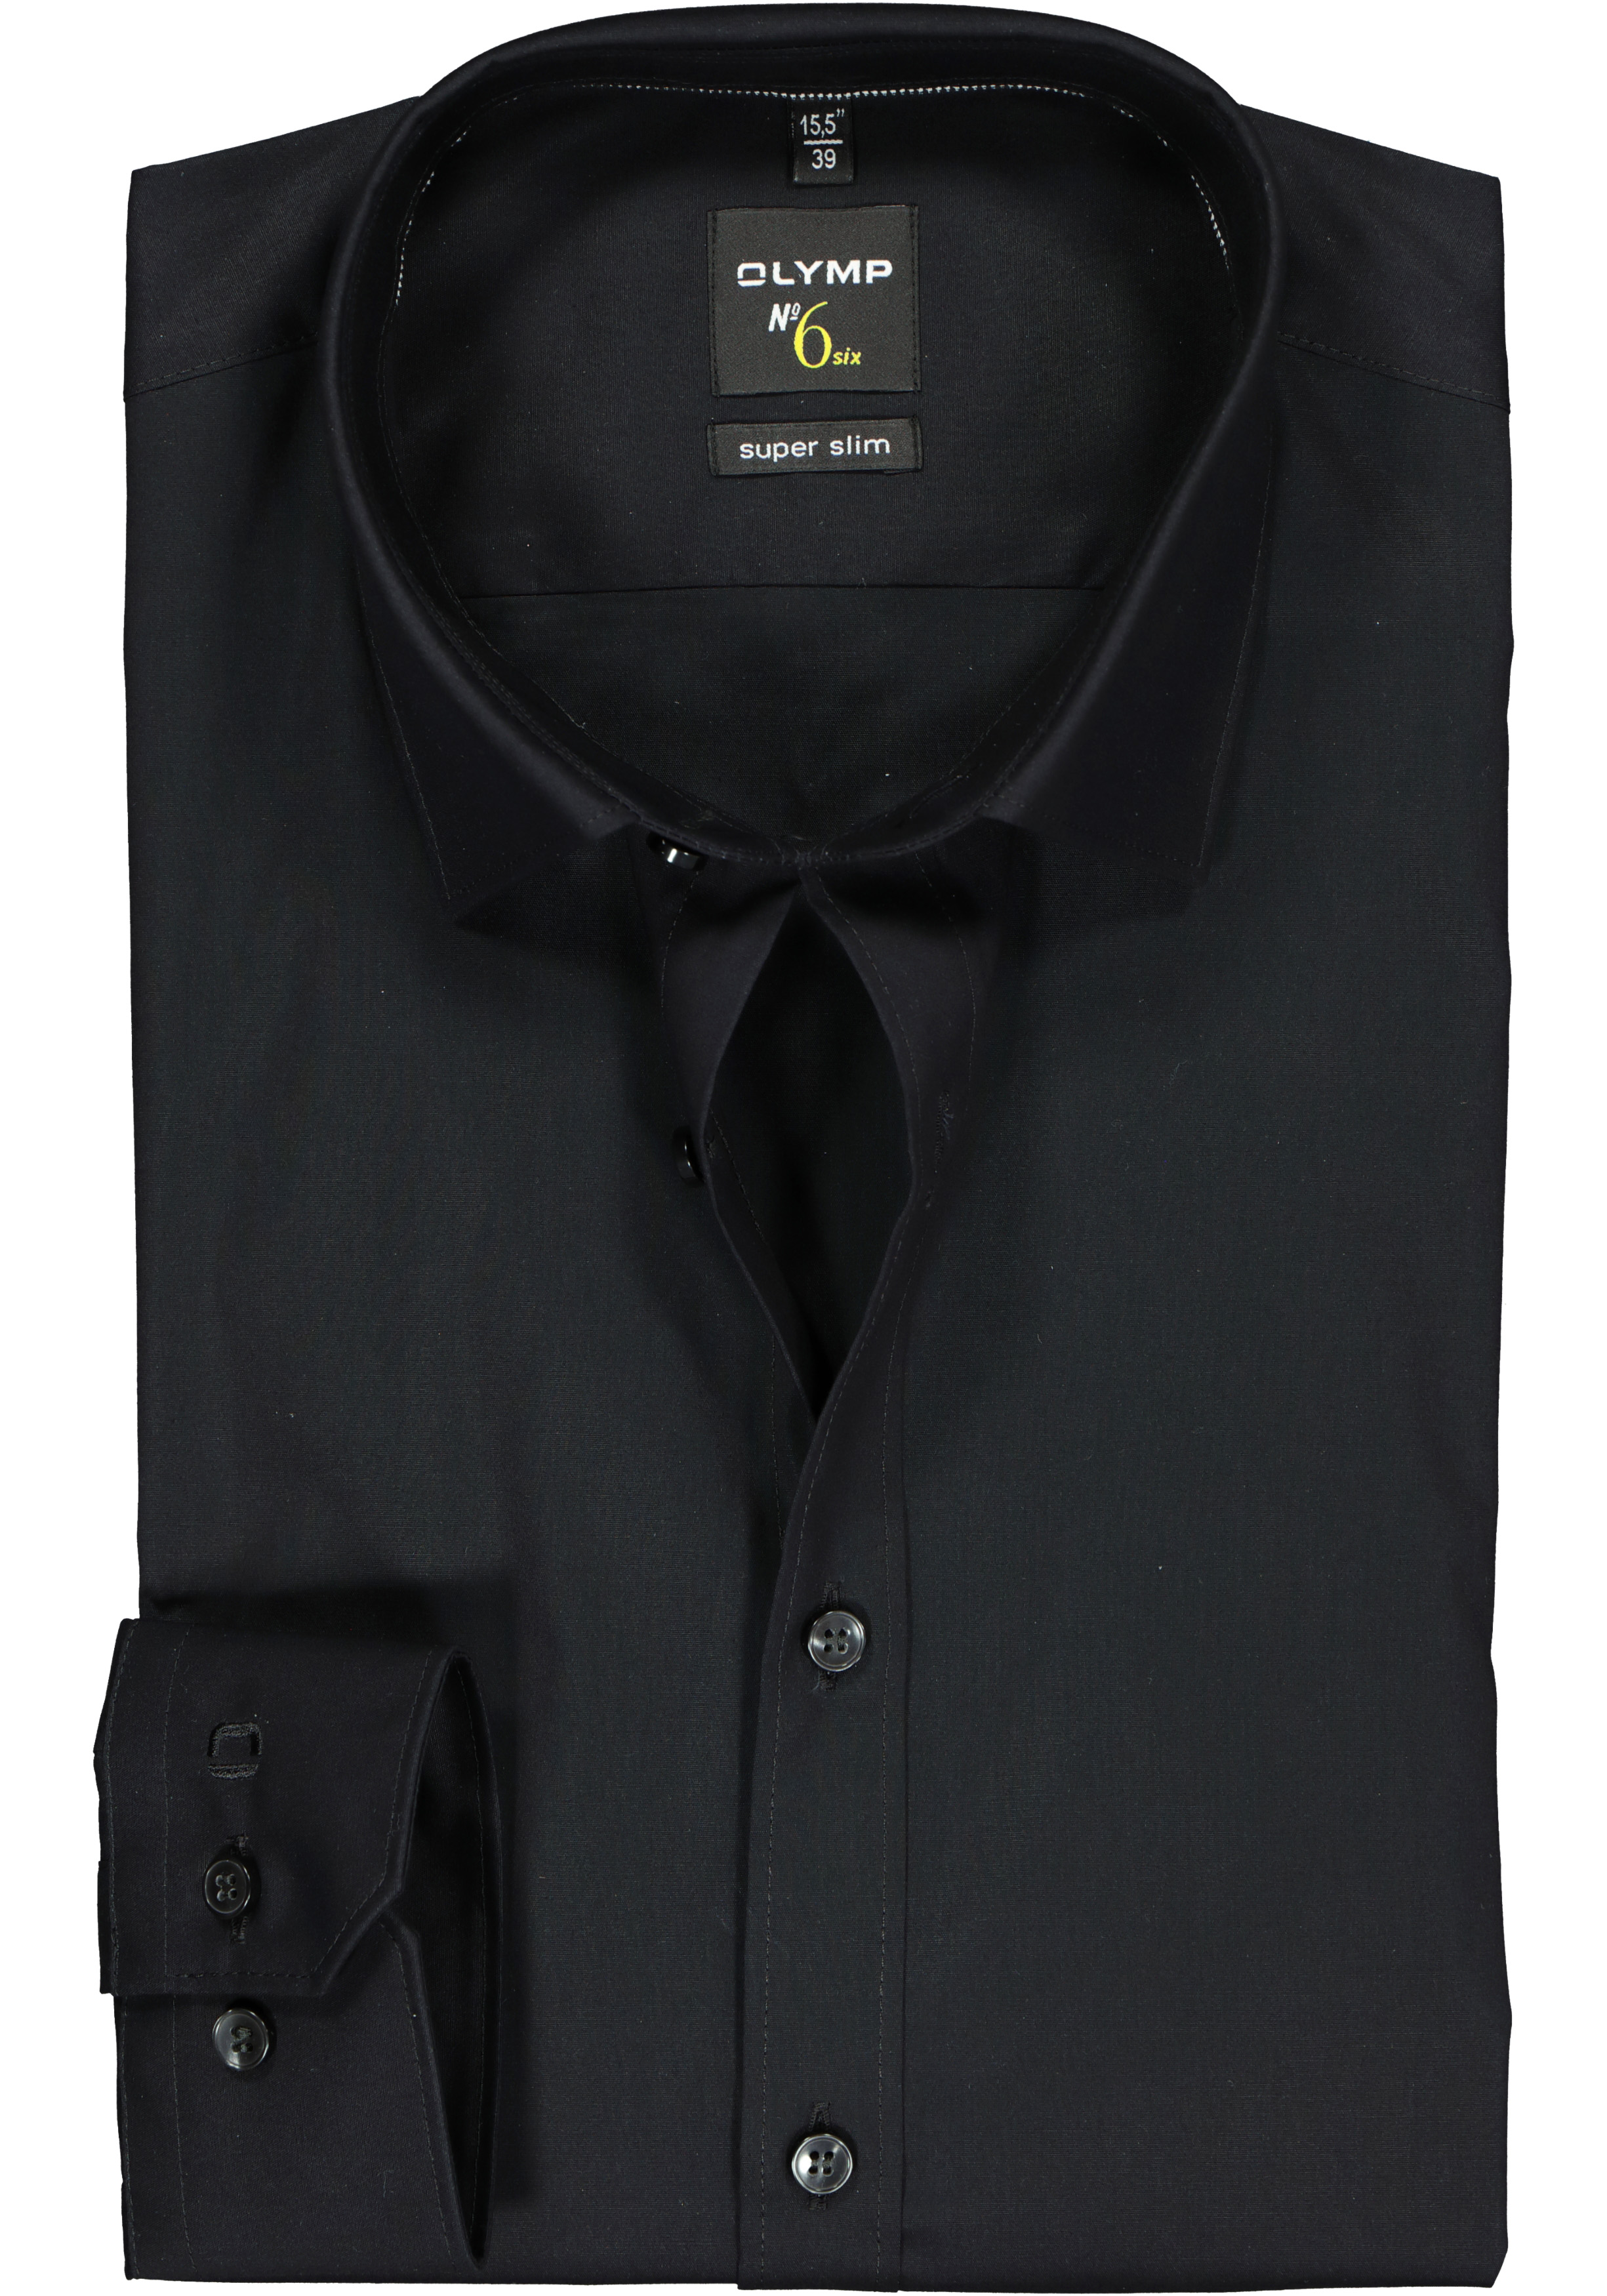 OLYMP No. Six super slim fit overhemd, mouwlengte 7, zwart       